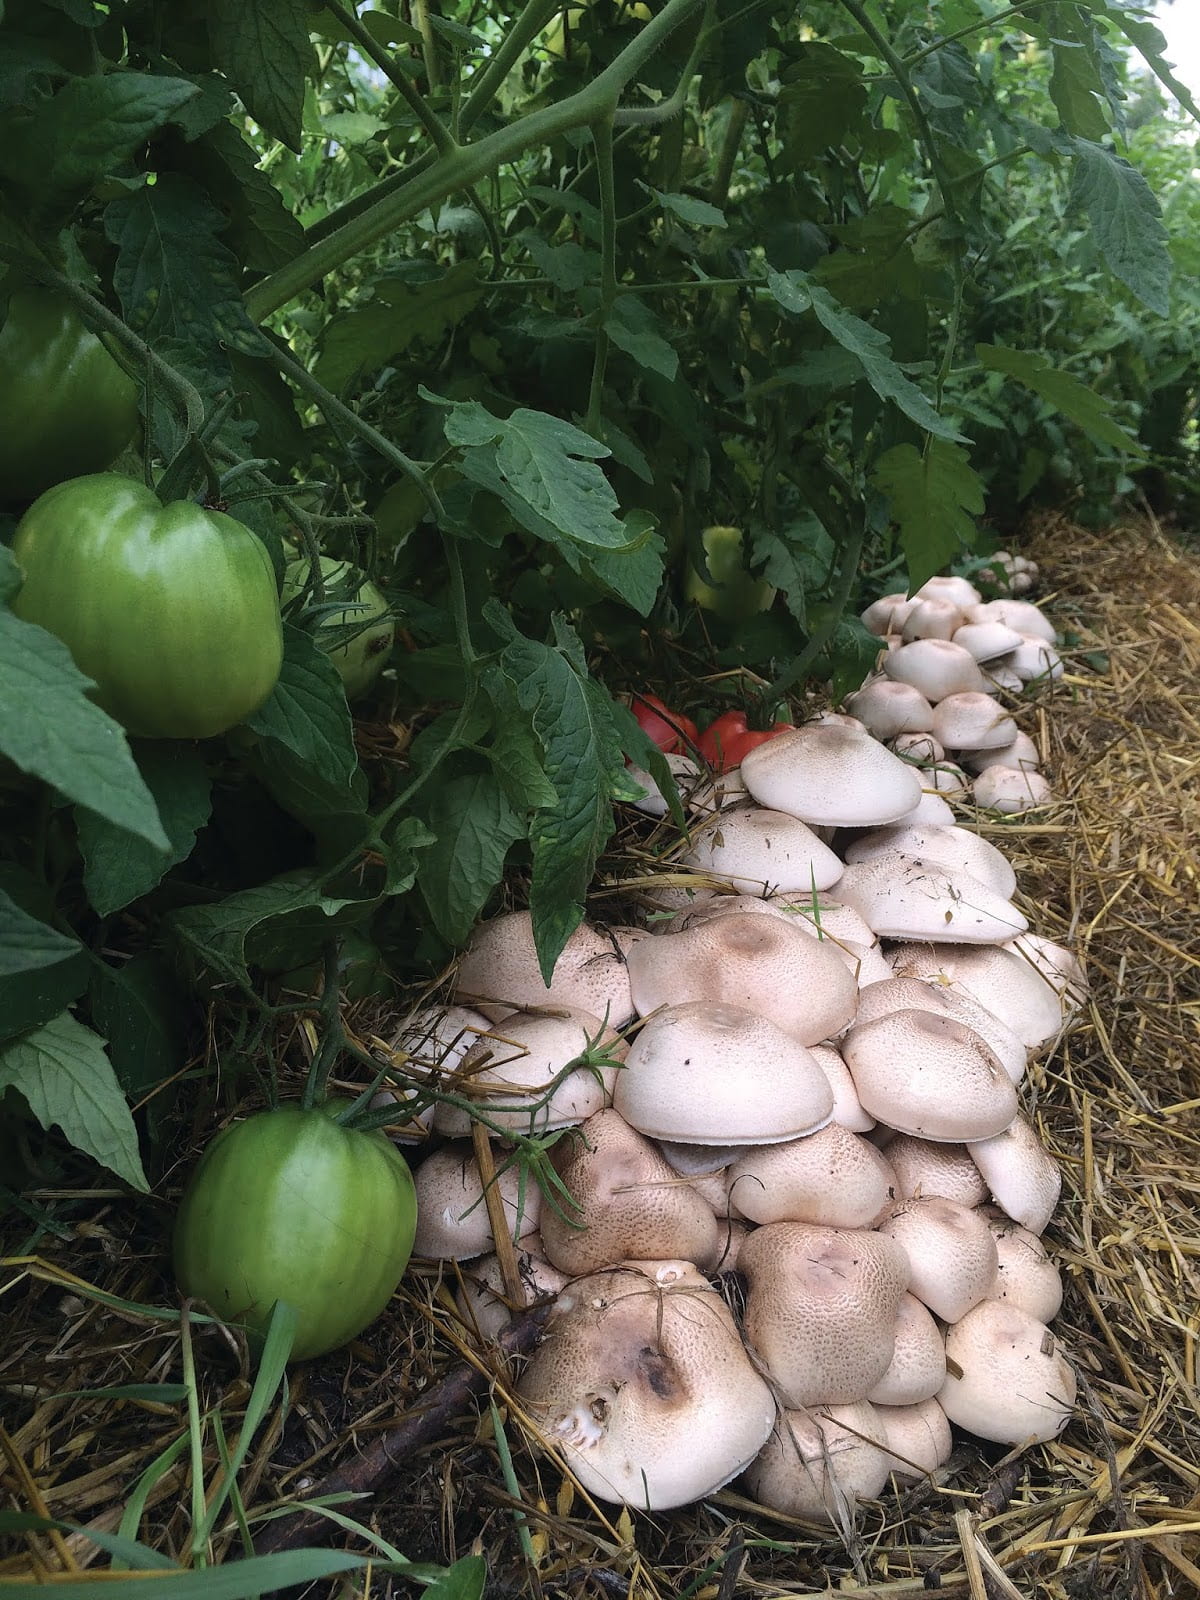 mushrooms growing next to tomato plants